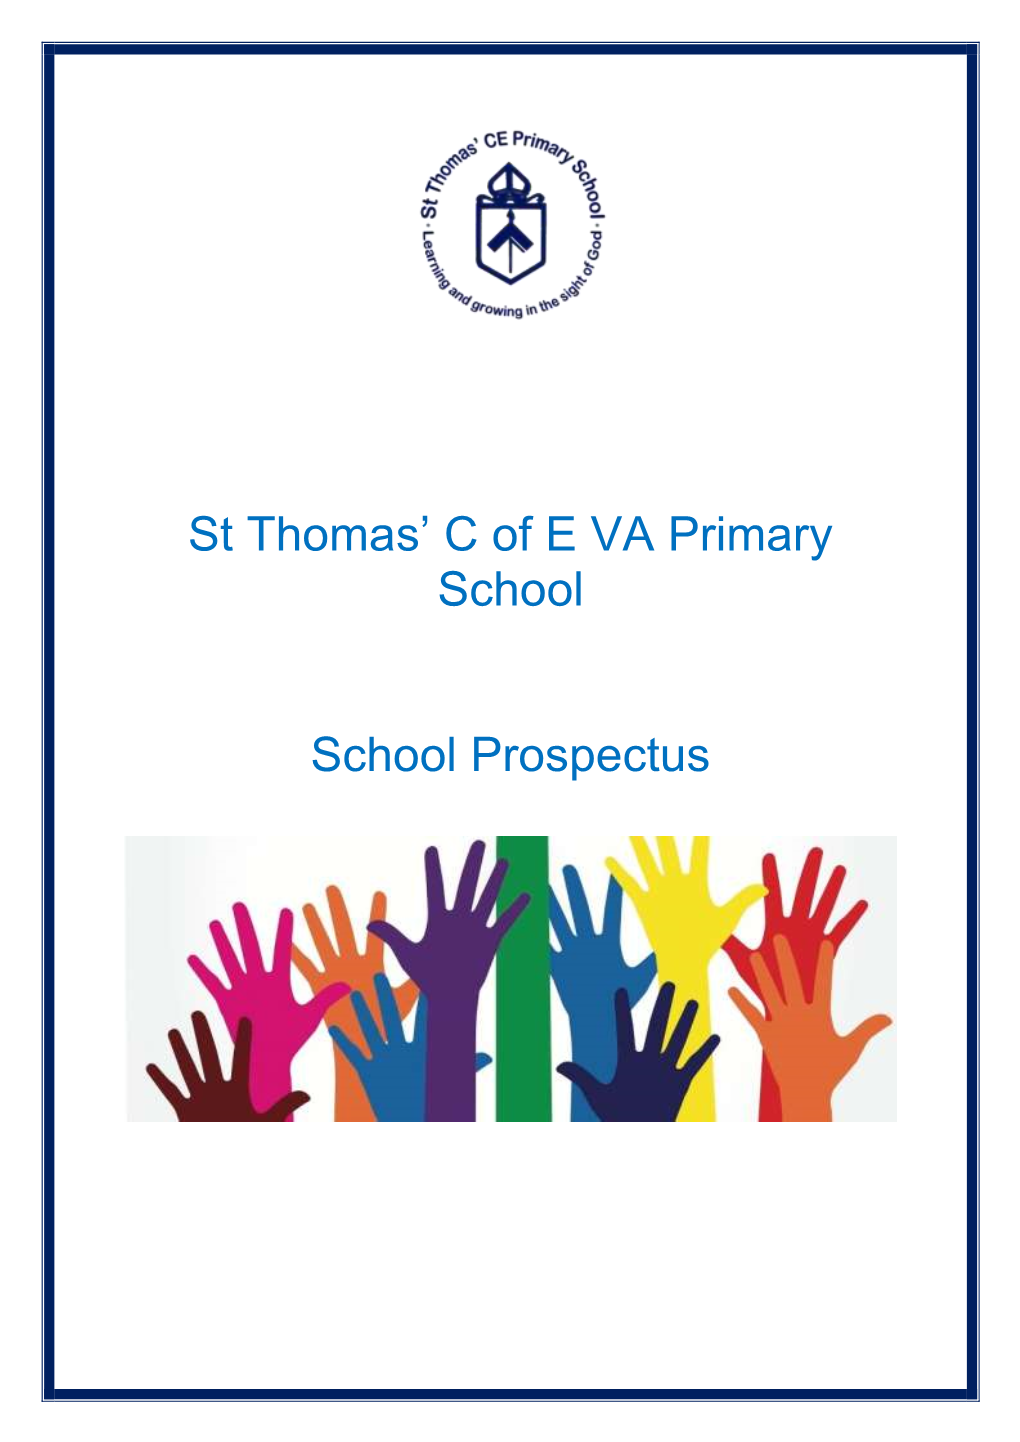 St Thomas' C of E VA Primary School School Prospectus